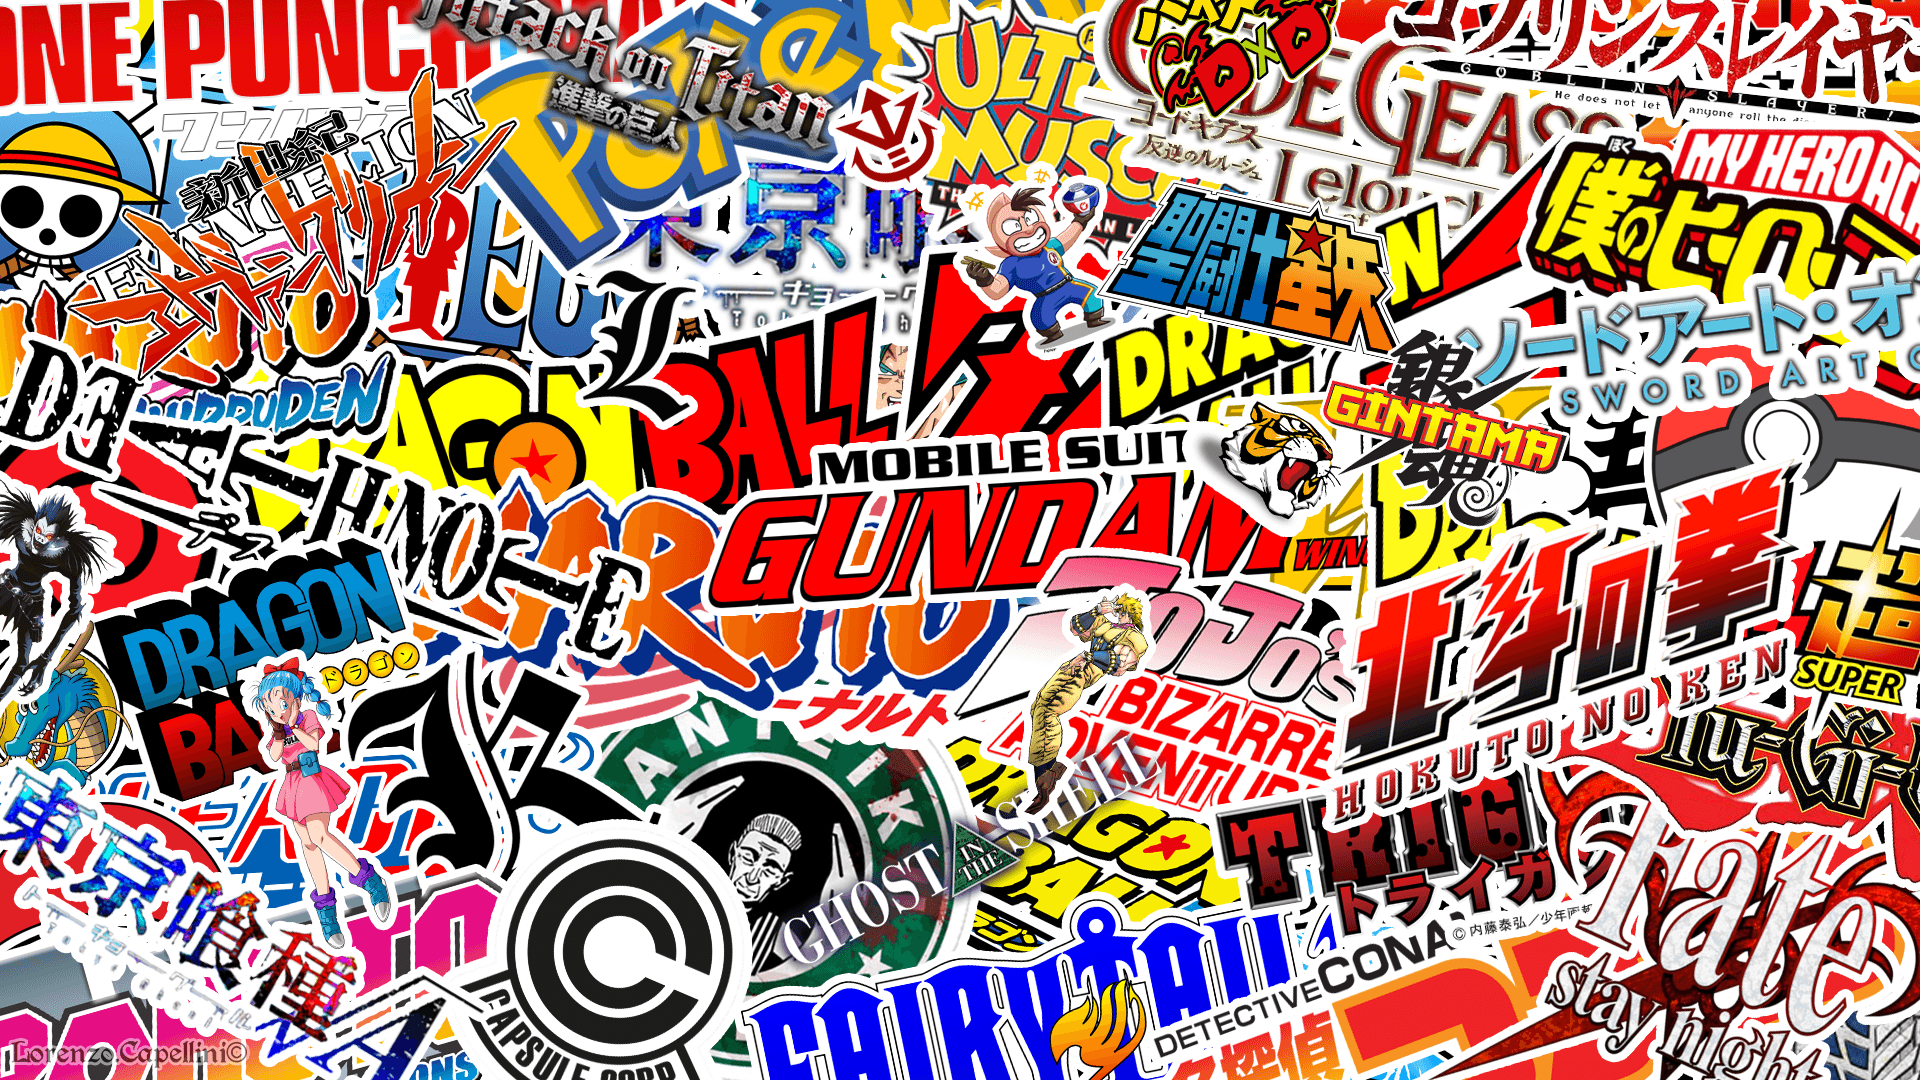 Anime logos Wallpaper sticker bomb style 1920*1080